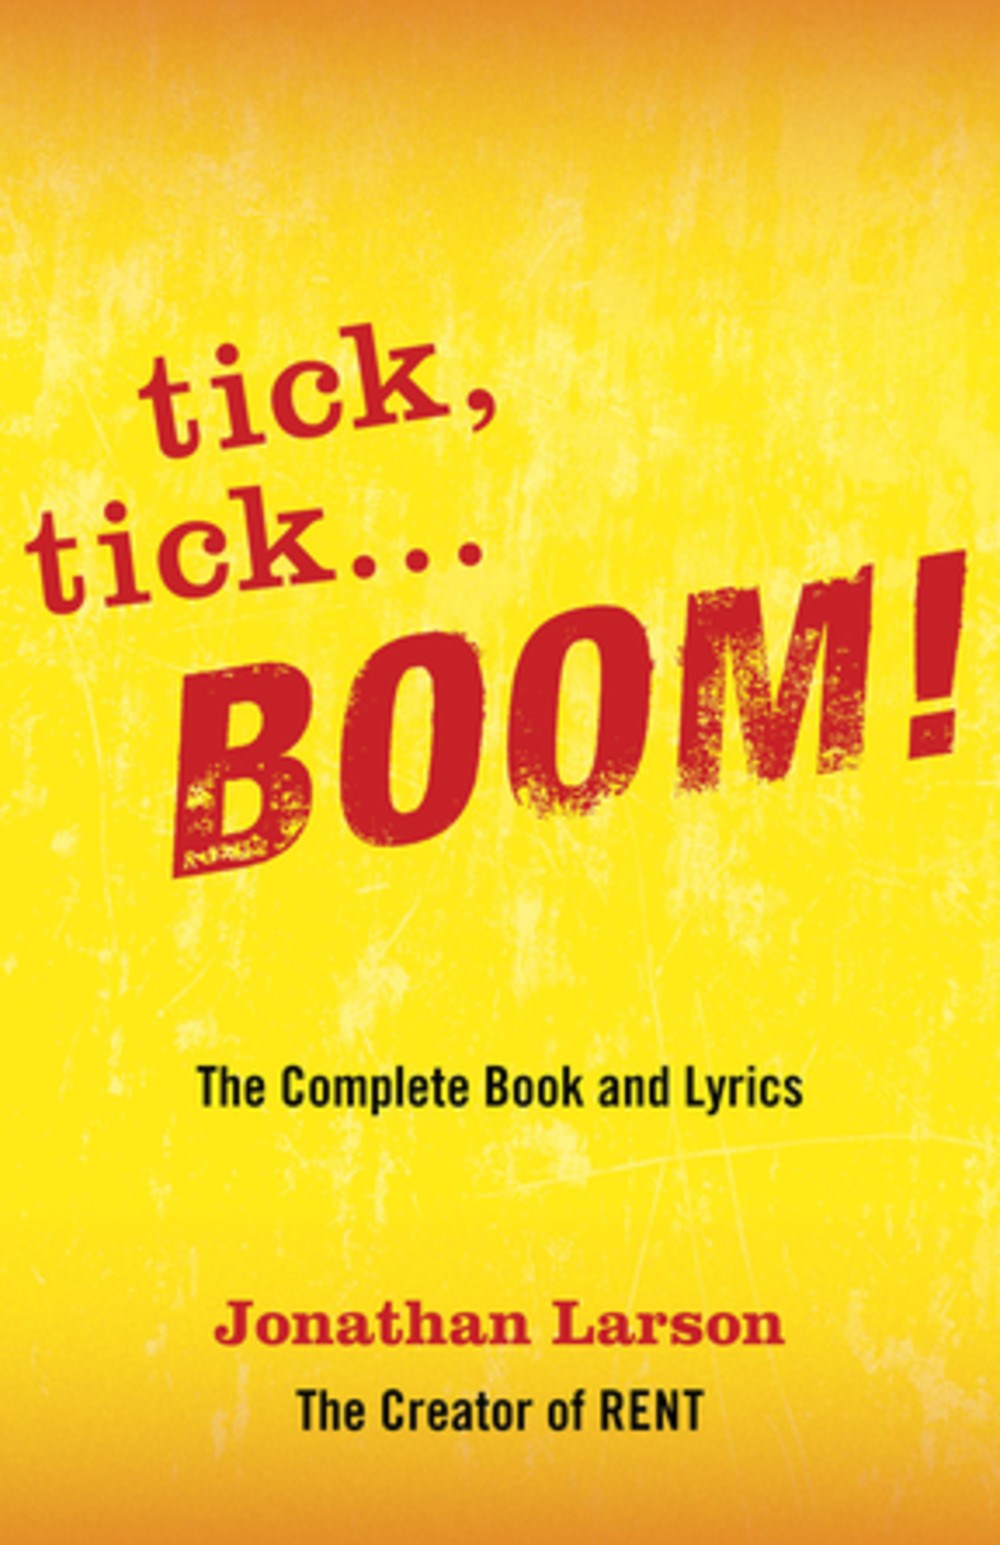 tick tick ... BOOM!: The Complete Book and Lyrics